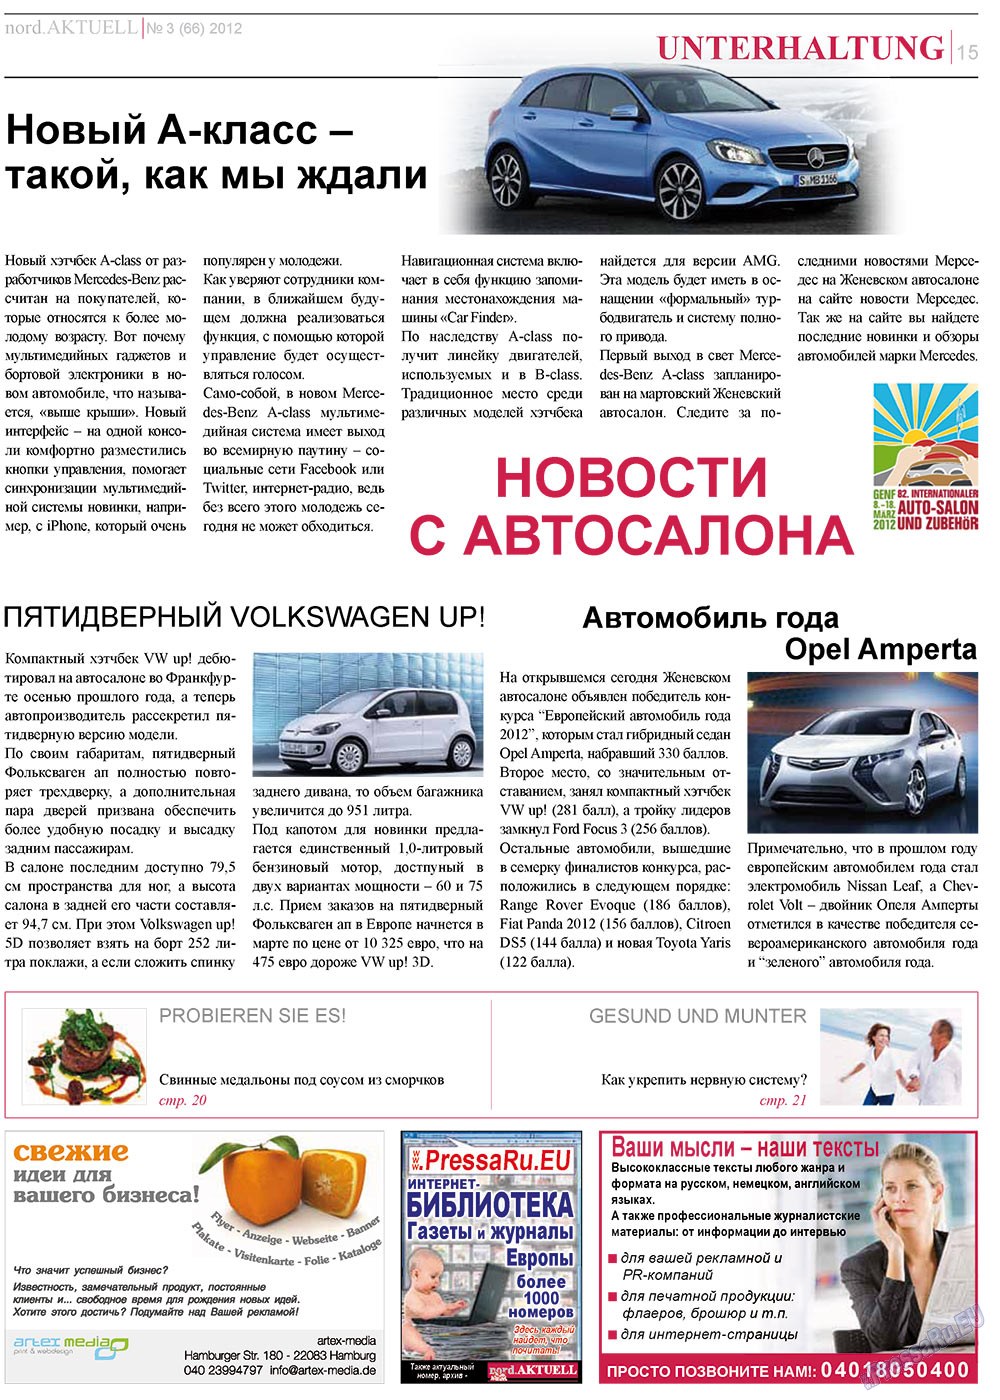 nord.Aktuell, газета. 2012 №3 стр.15